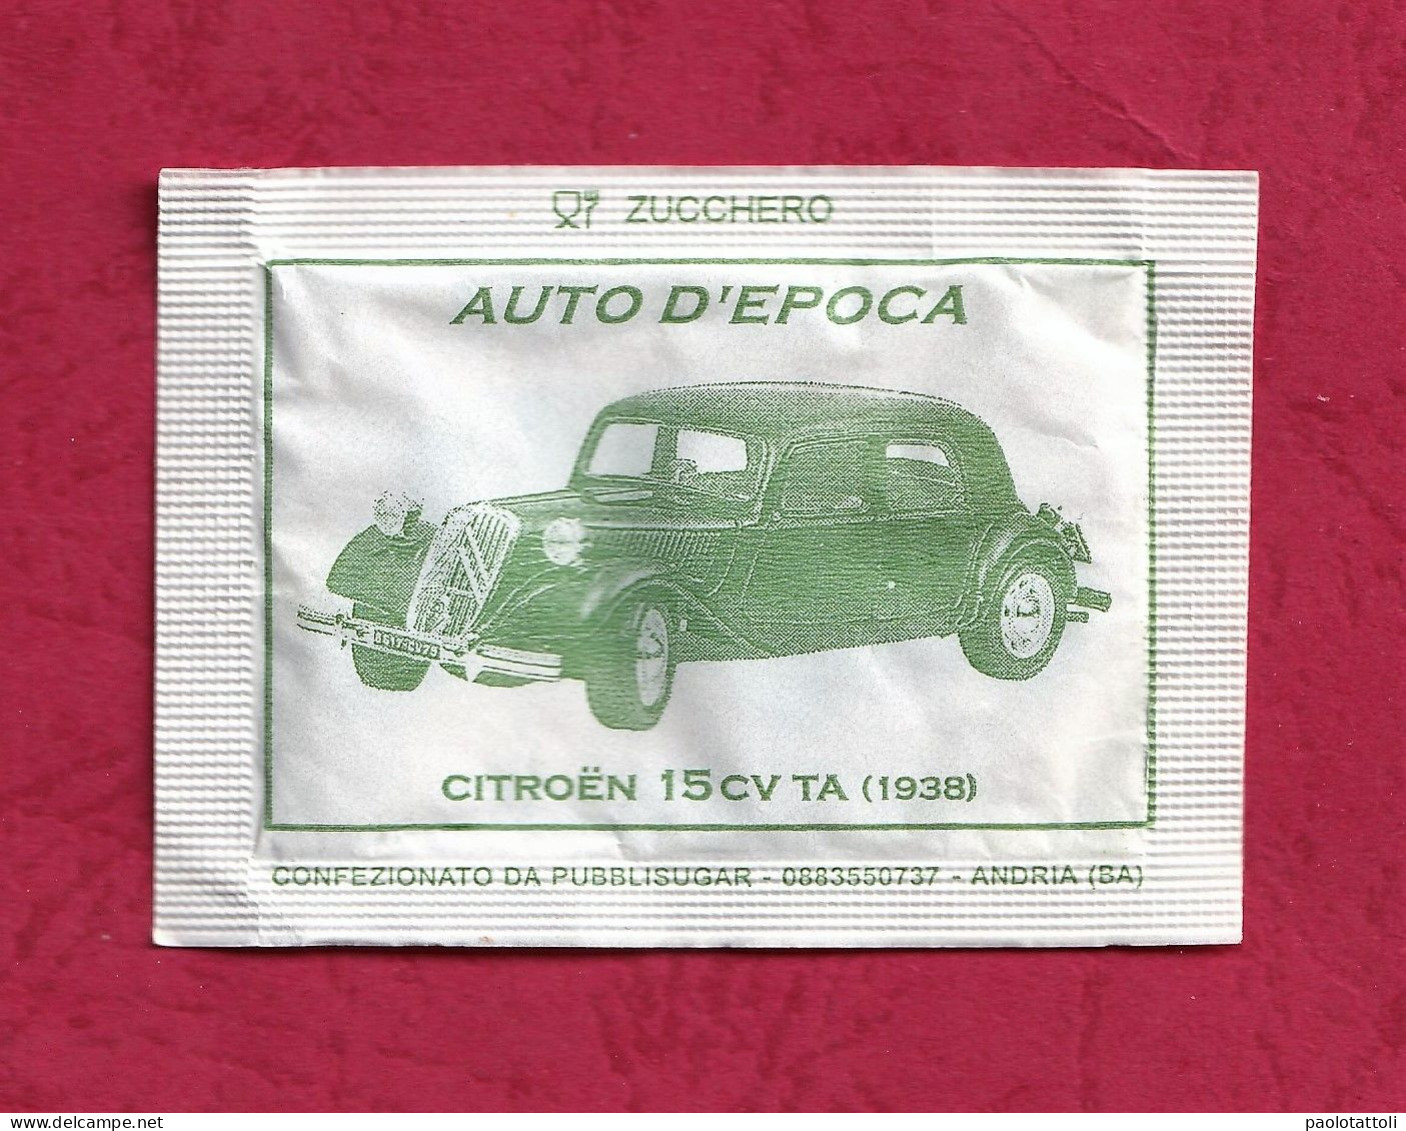 Bustina Vuota Zucchero. Empty Sugar Bag- Cars. Auto D'epoca, Citroen 15 Cv TA-1938. Packed By Pubblisugar, Andria. BA. - Suiker